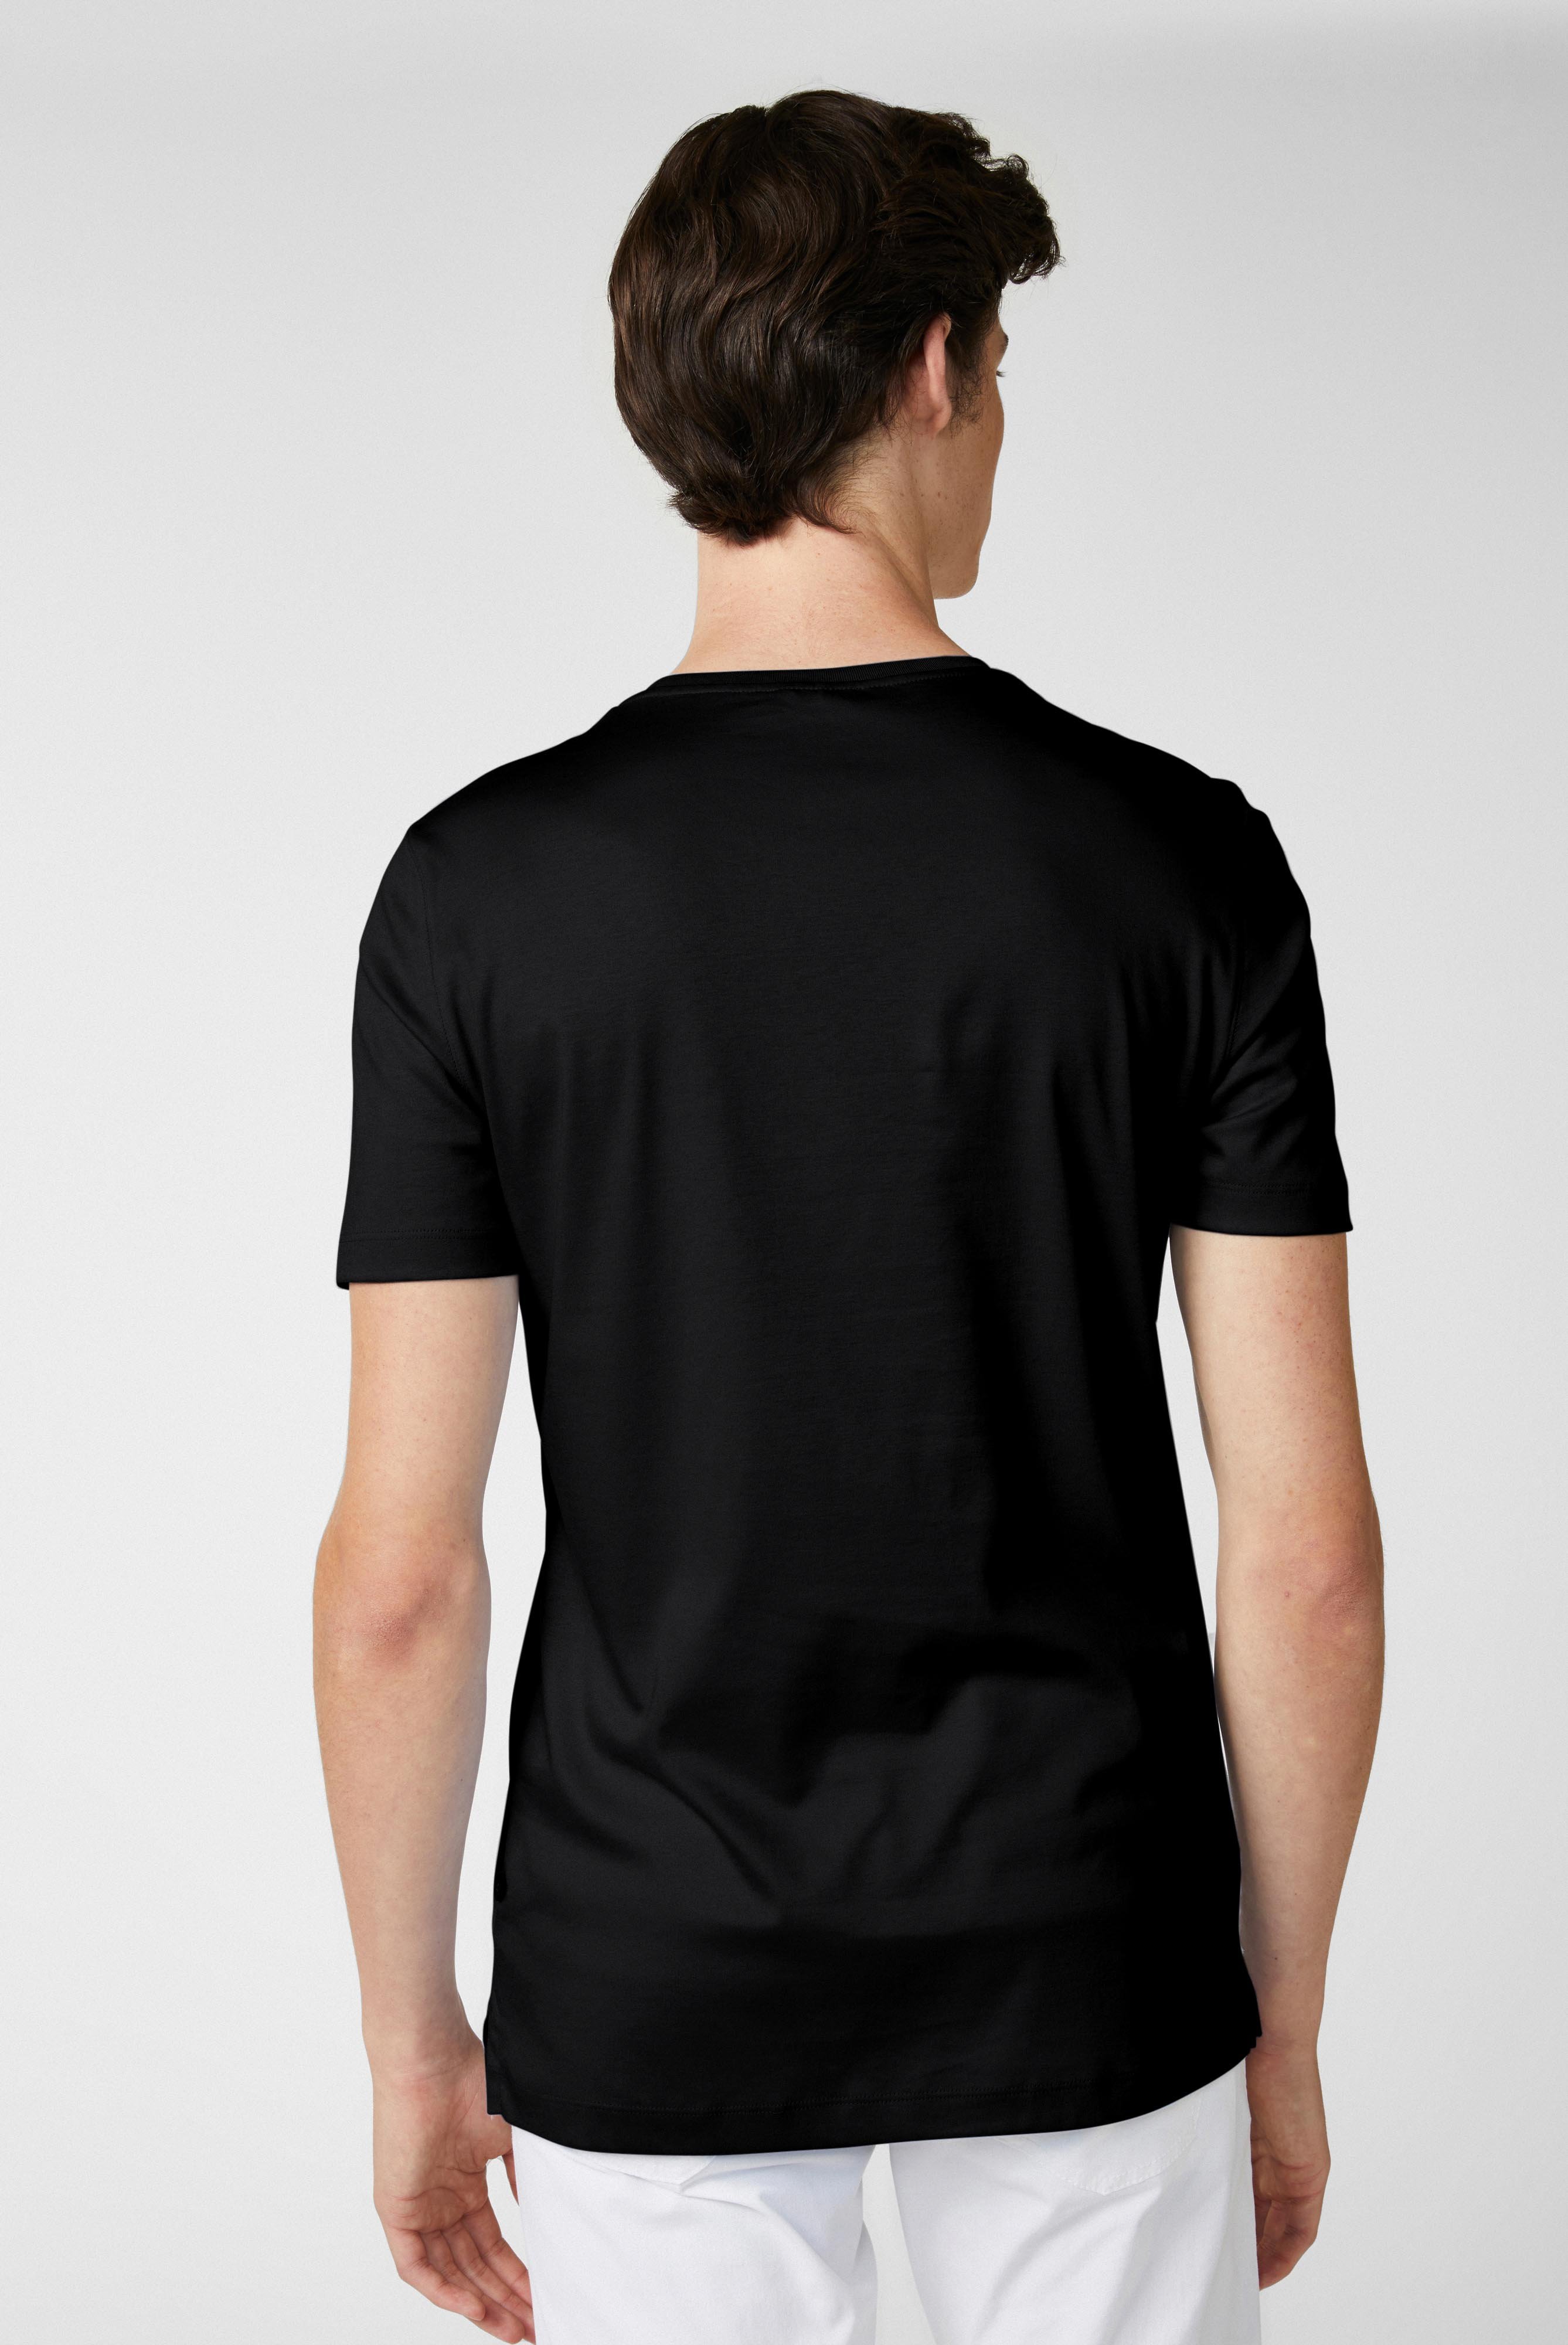 T-Shirts+Swiss Cotton Jersey Crew Neck T-Shirt+20.1717.UX.180031.099.XXL